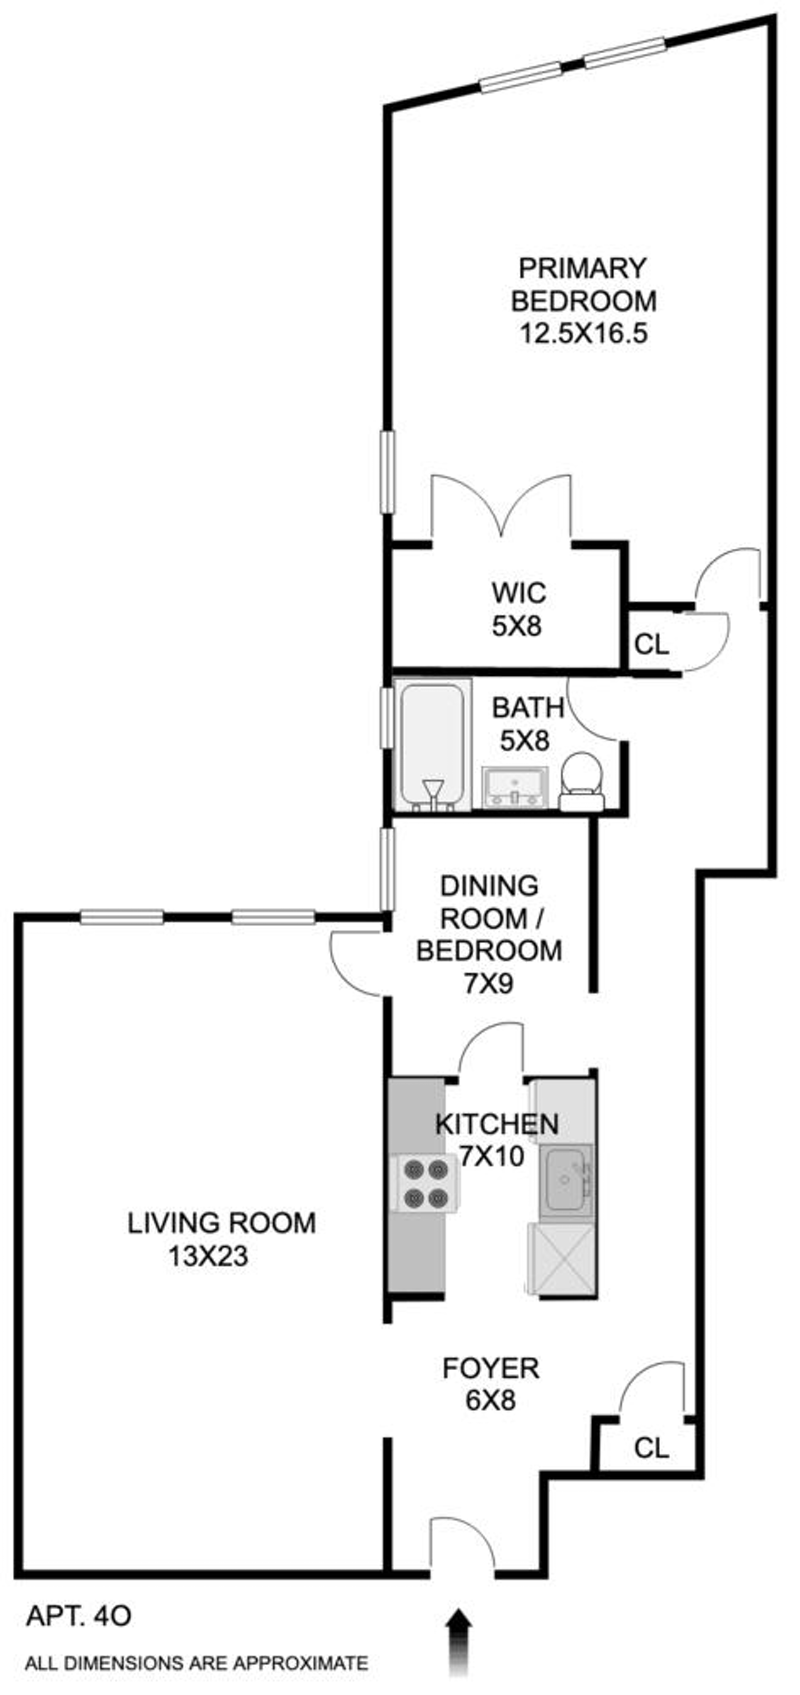 Floorplan for 73 -20 Austin Street, 4O